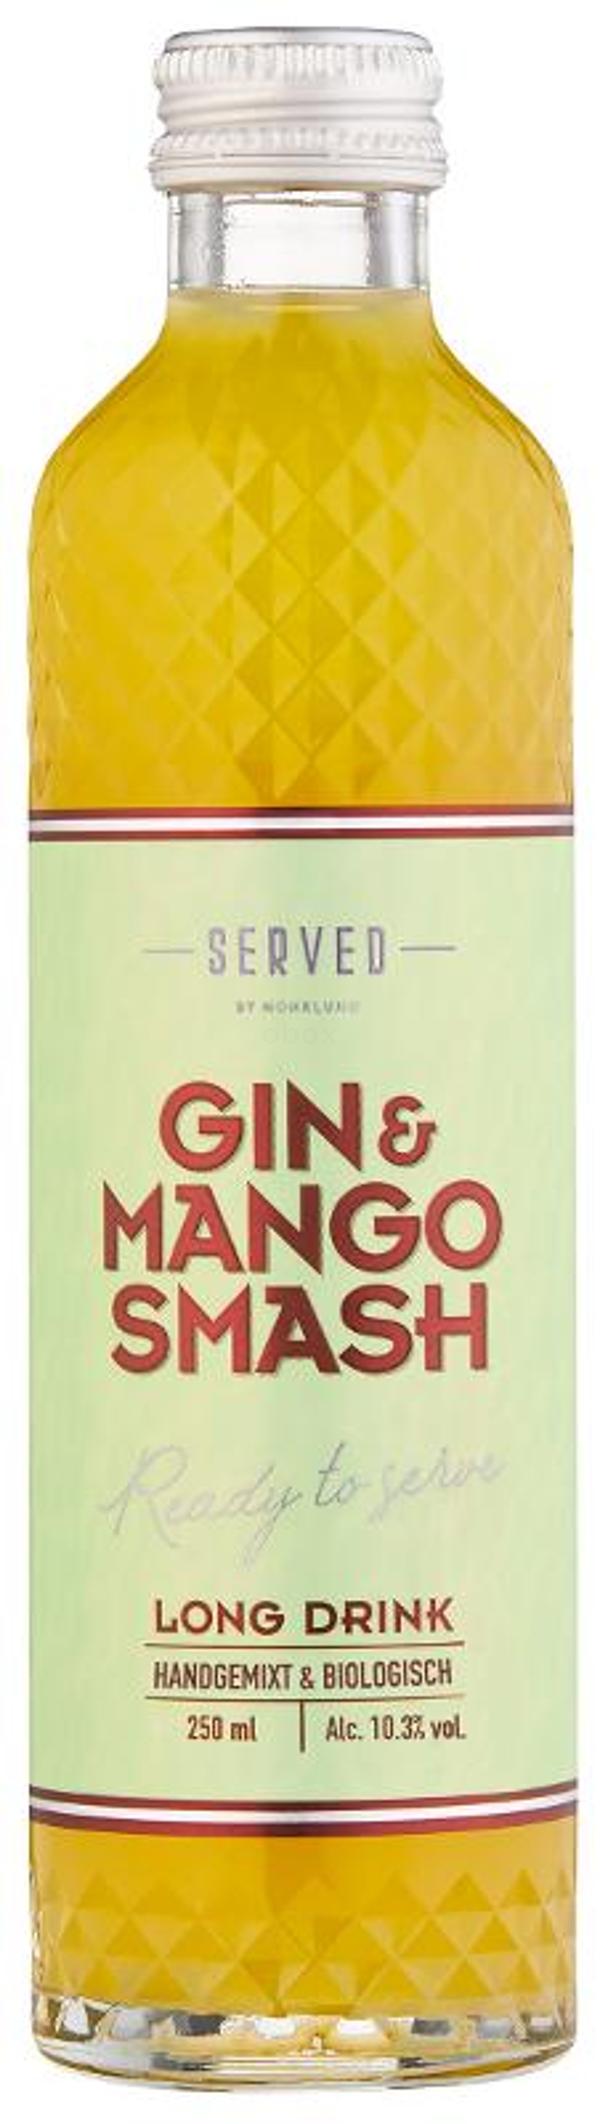 Produktfoto zu Gin & Mango Smash, Long Drink Alk. 10,3% vol